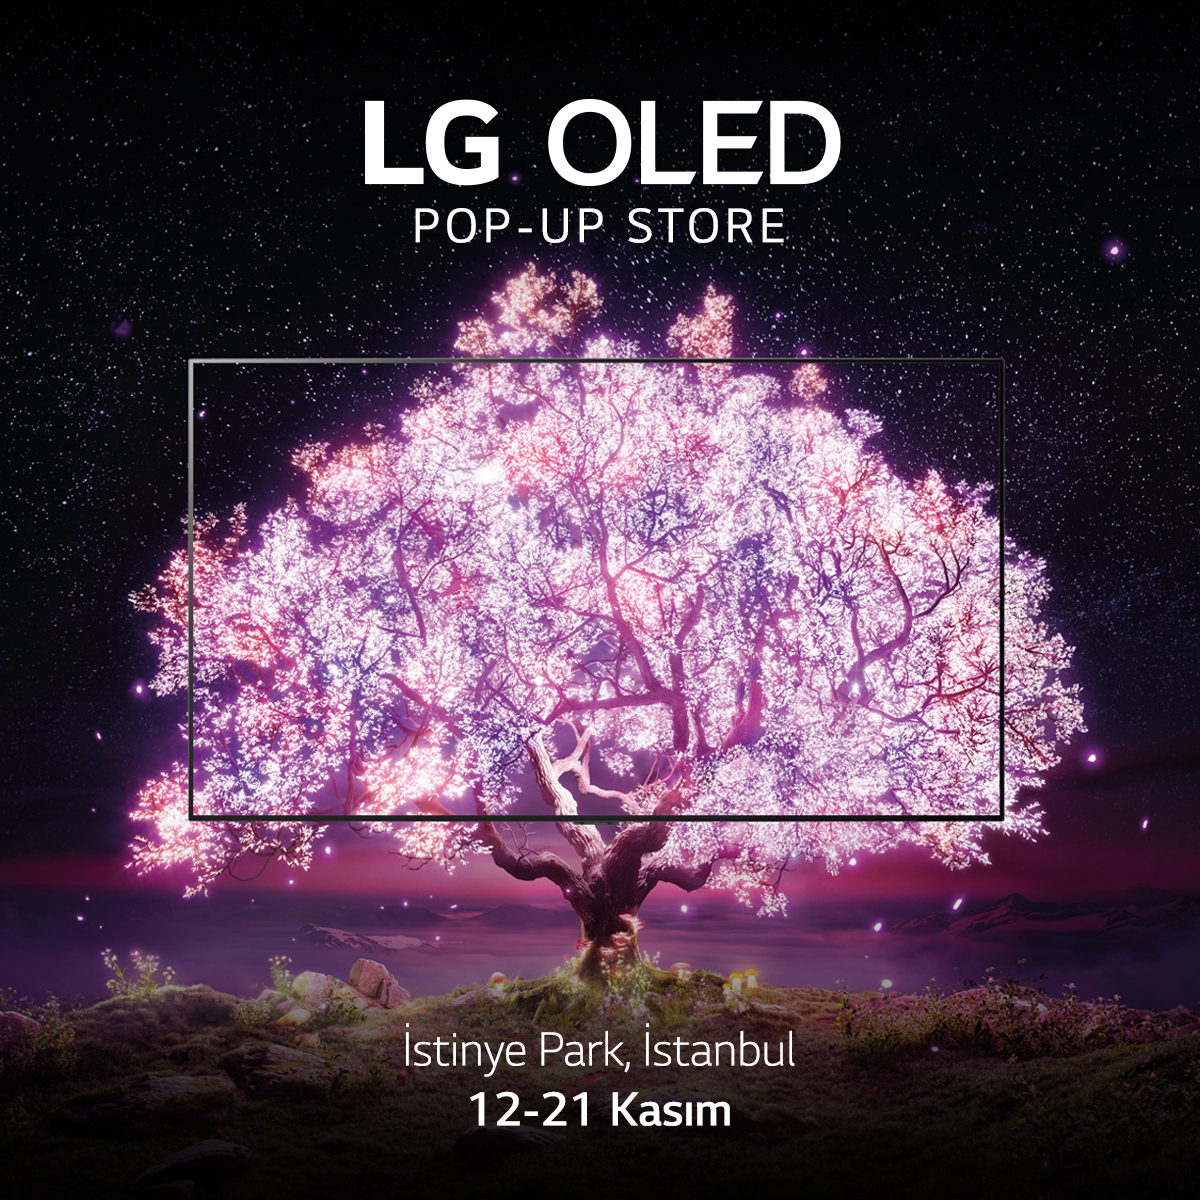 LG OLED Pop-Up Store 12-21 Kasım’da İstinyePark’ta